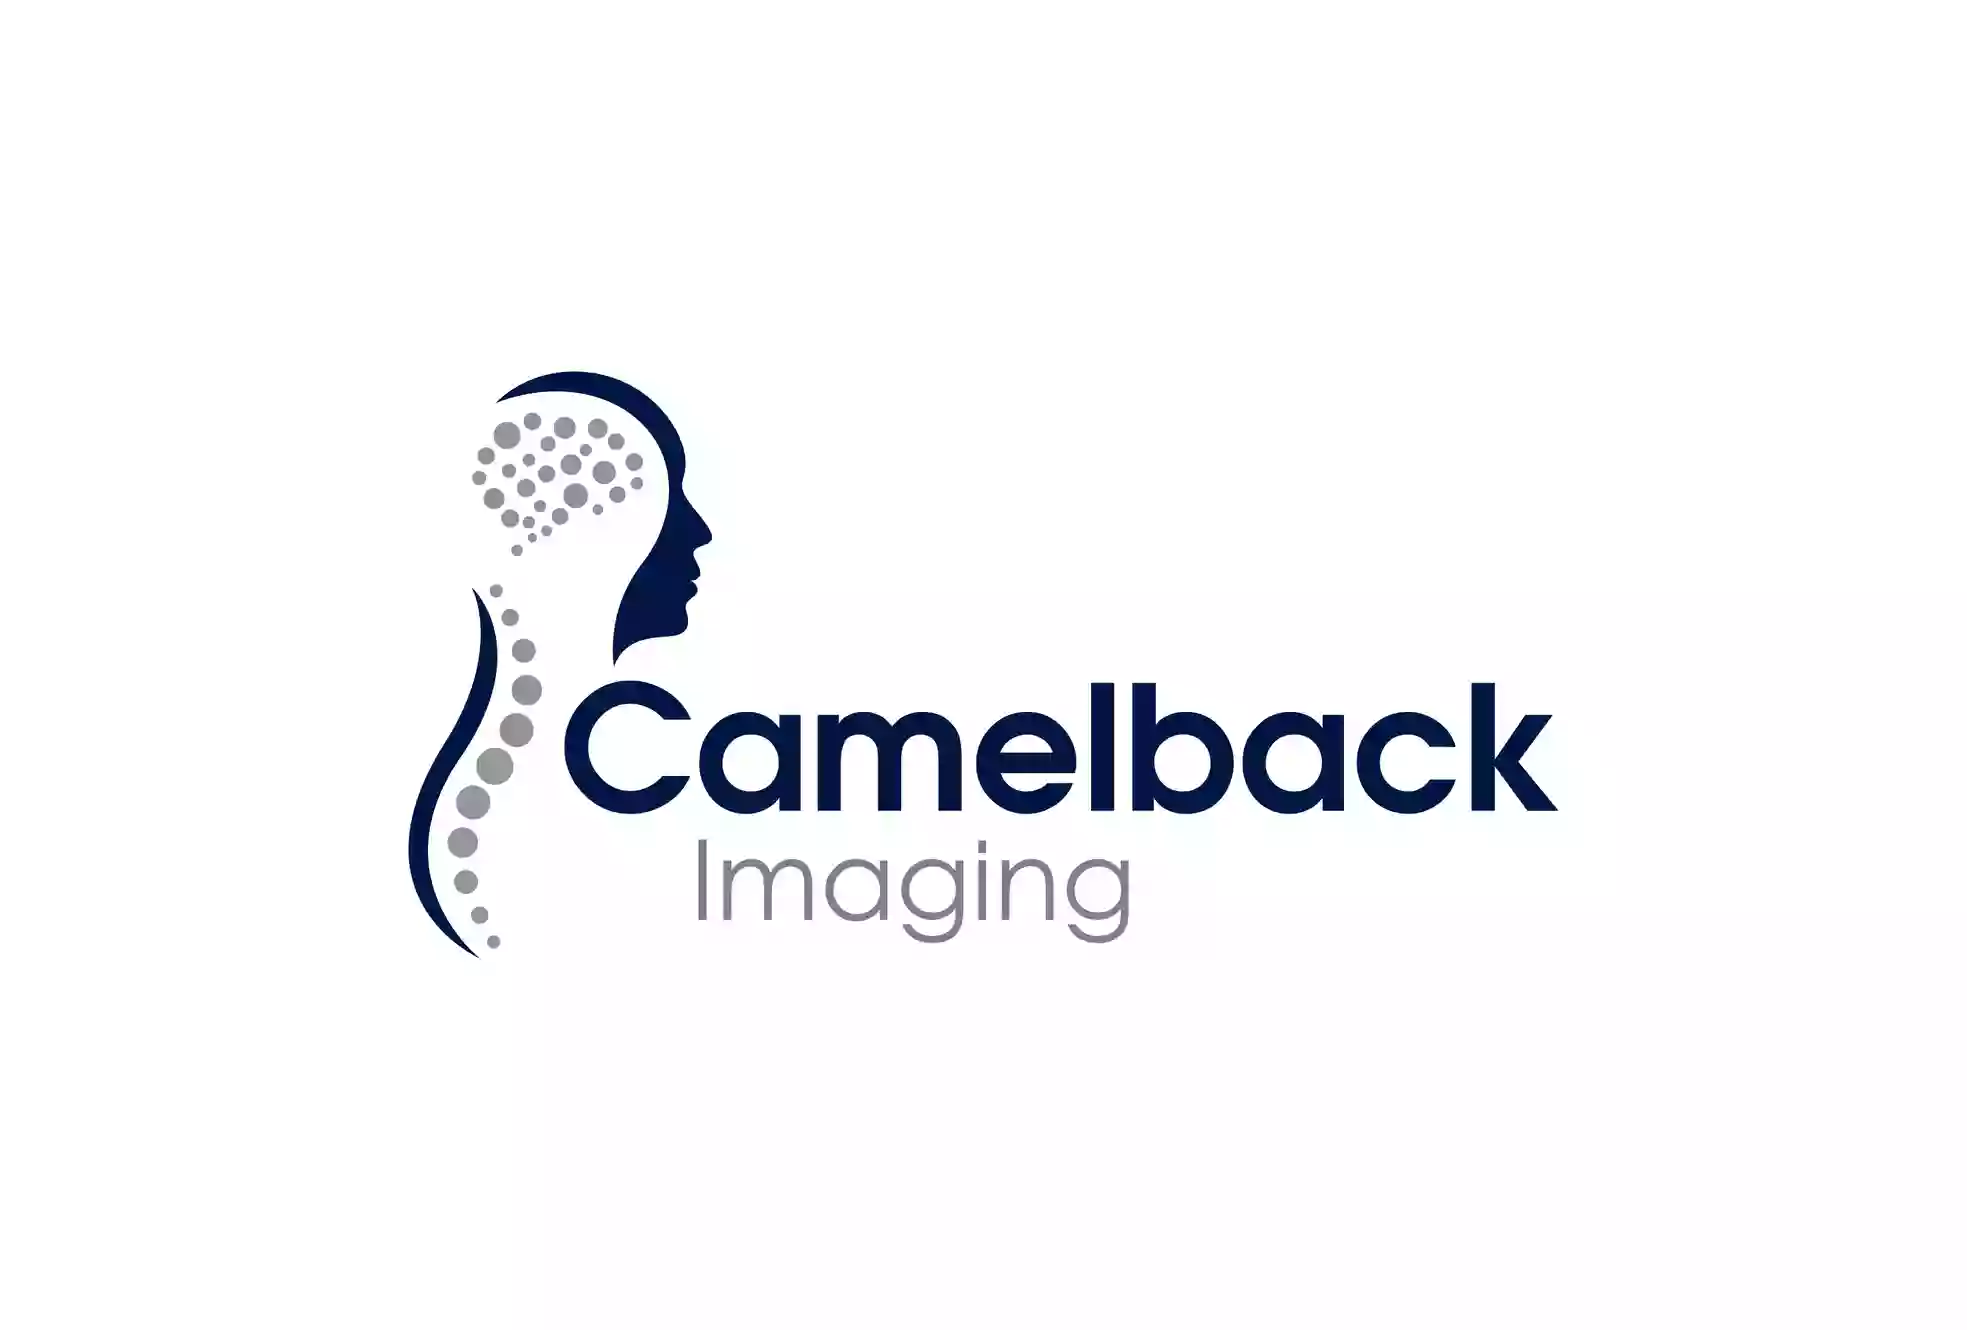 Camelback Imaging